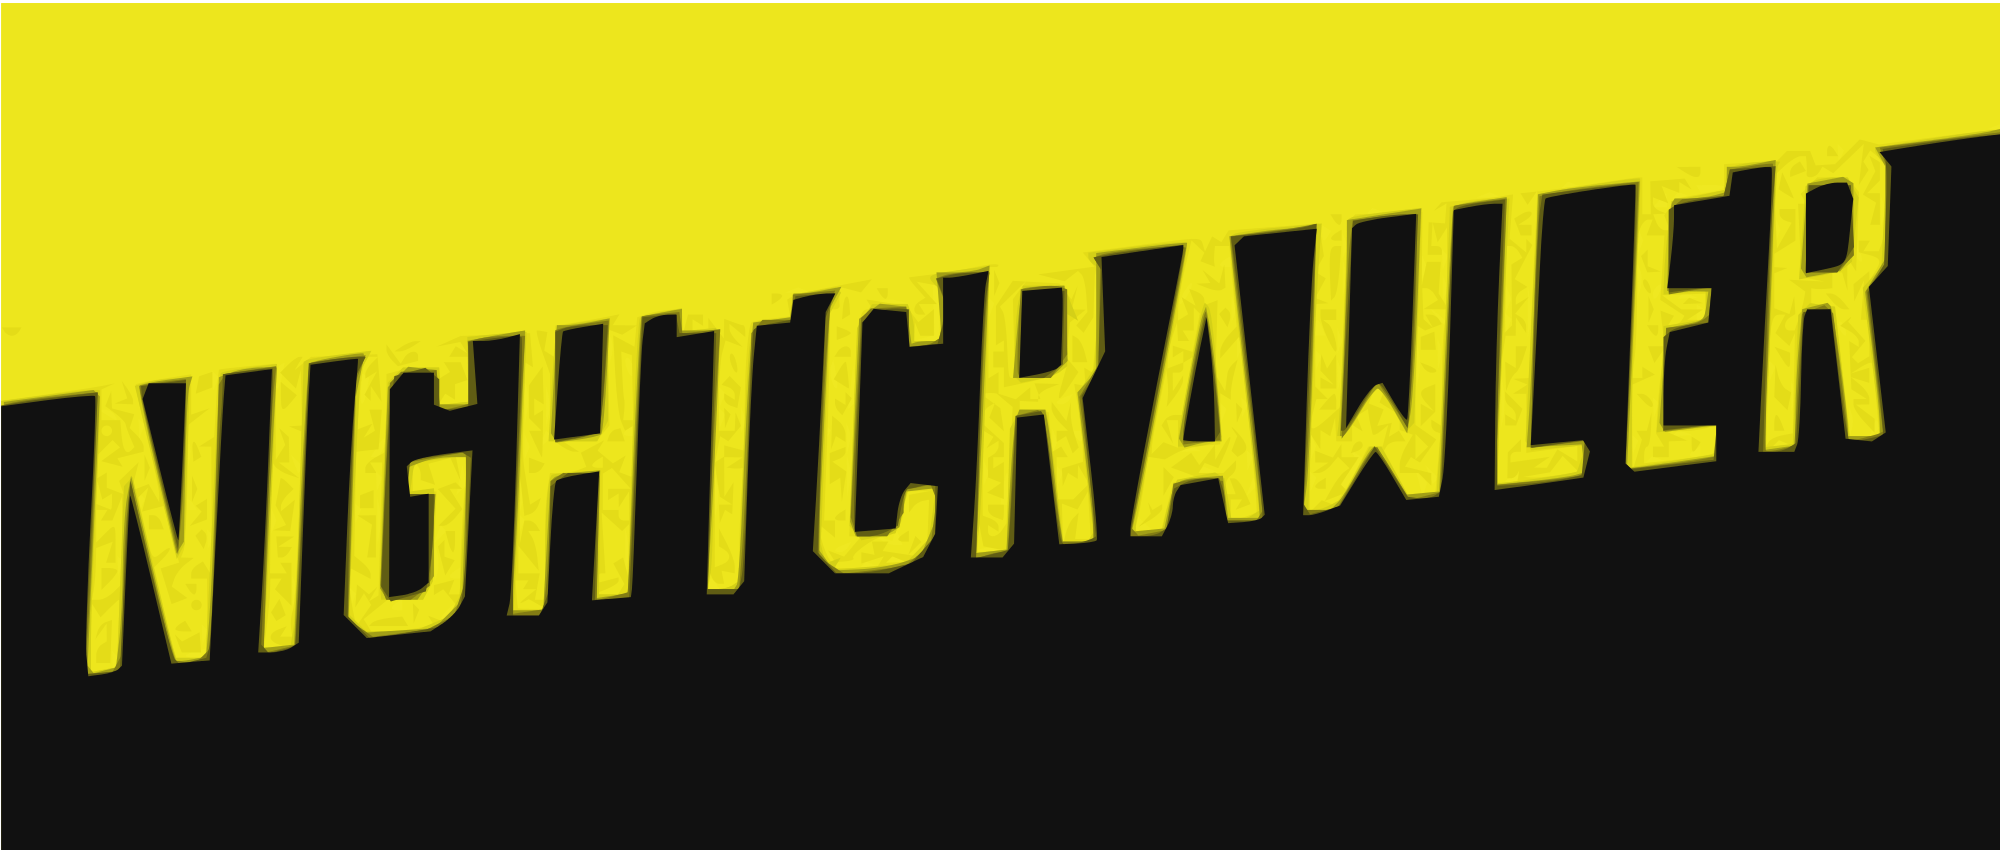 Nightcrawler Logo - File:Nightcrawler logo.svg - Wikimedia Commons